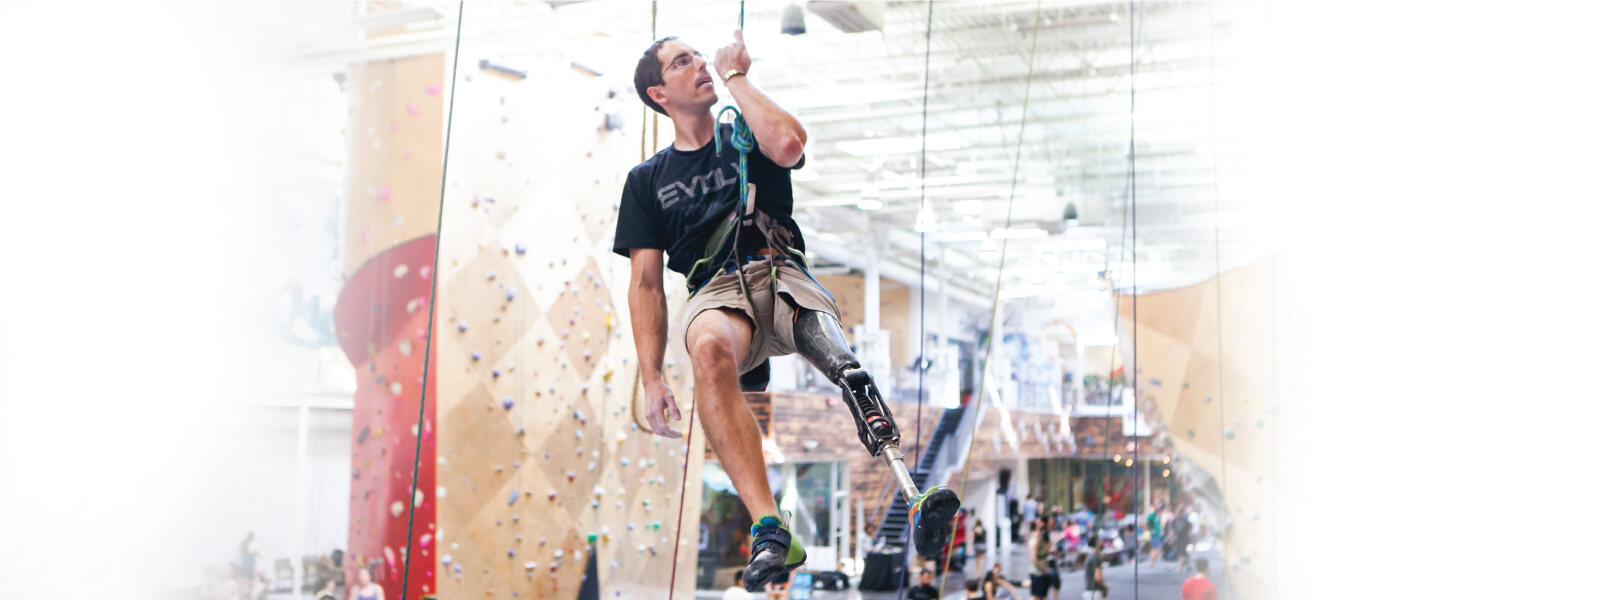 Man with prosthetic leg indoor rock climbing